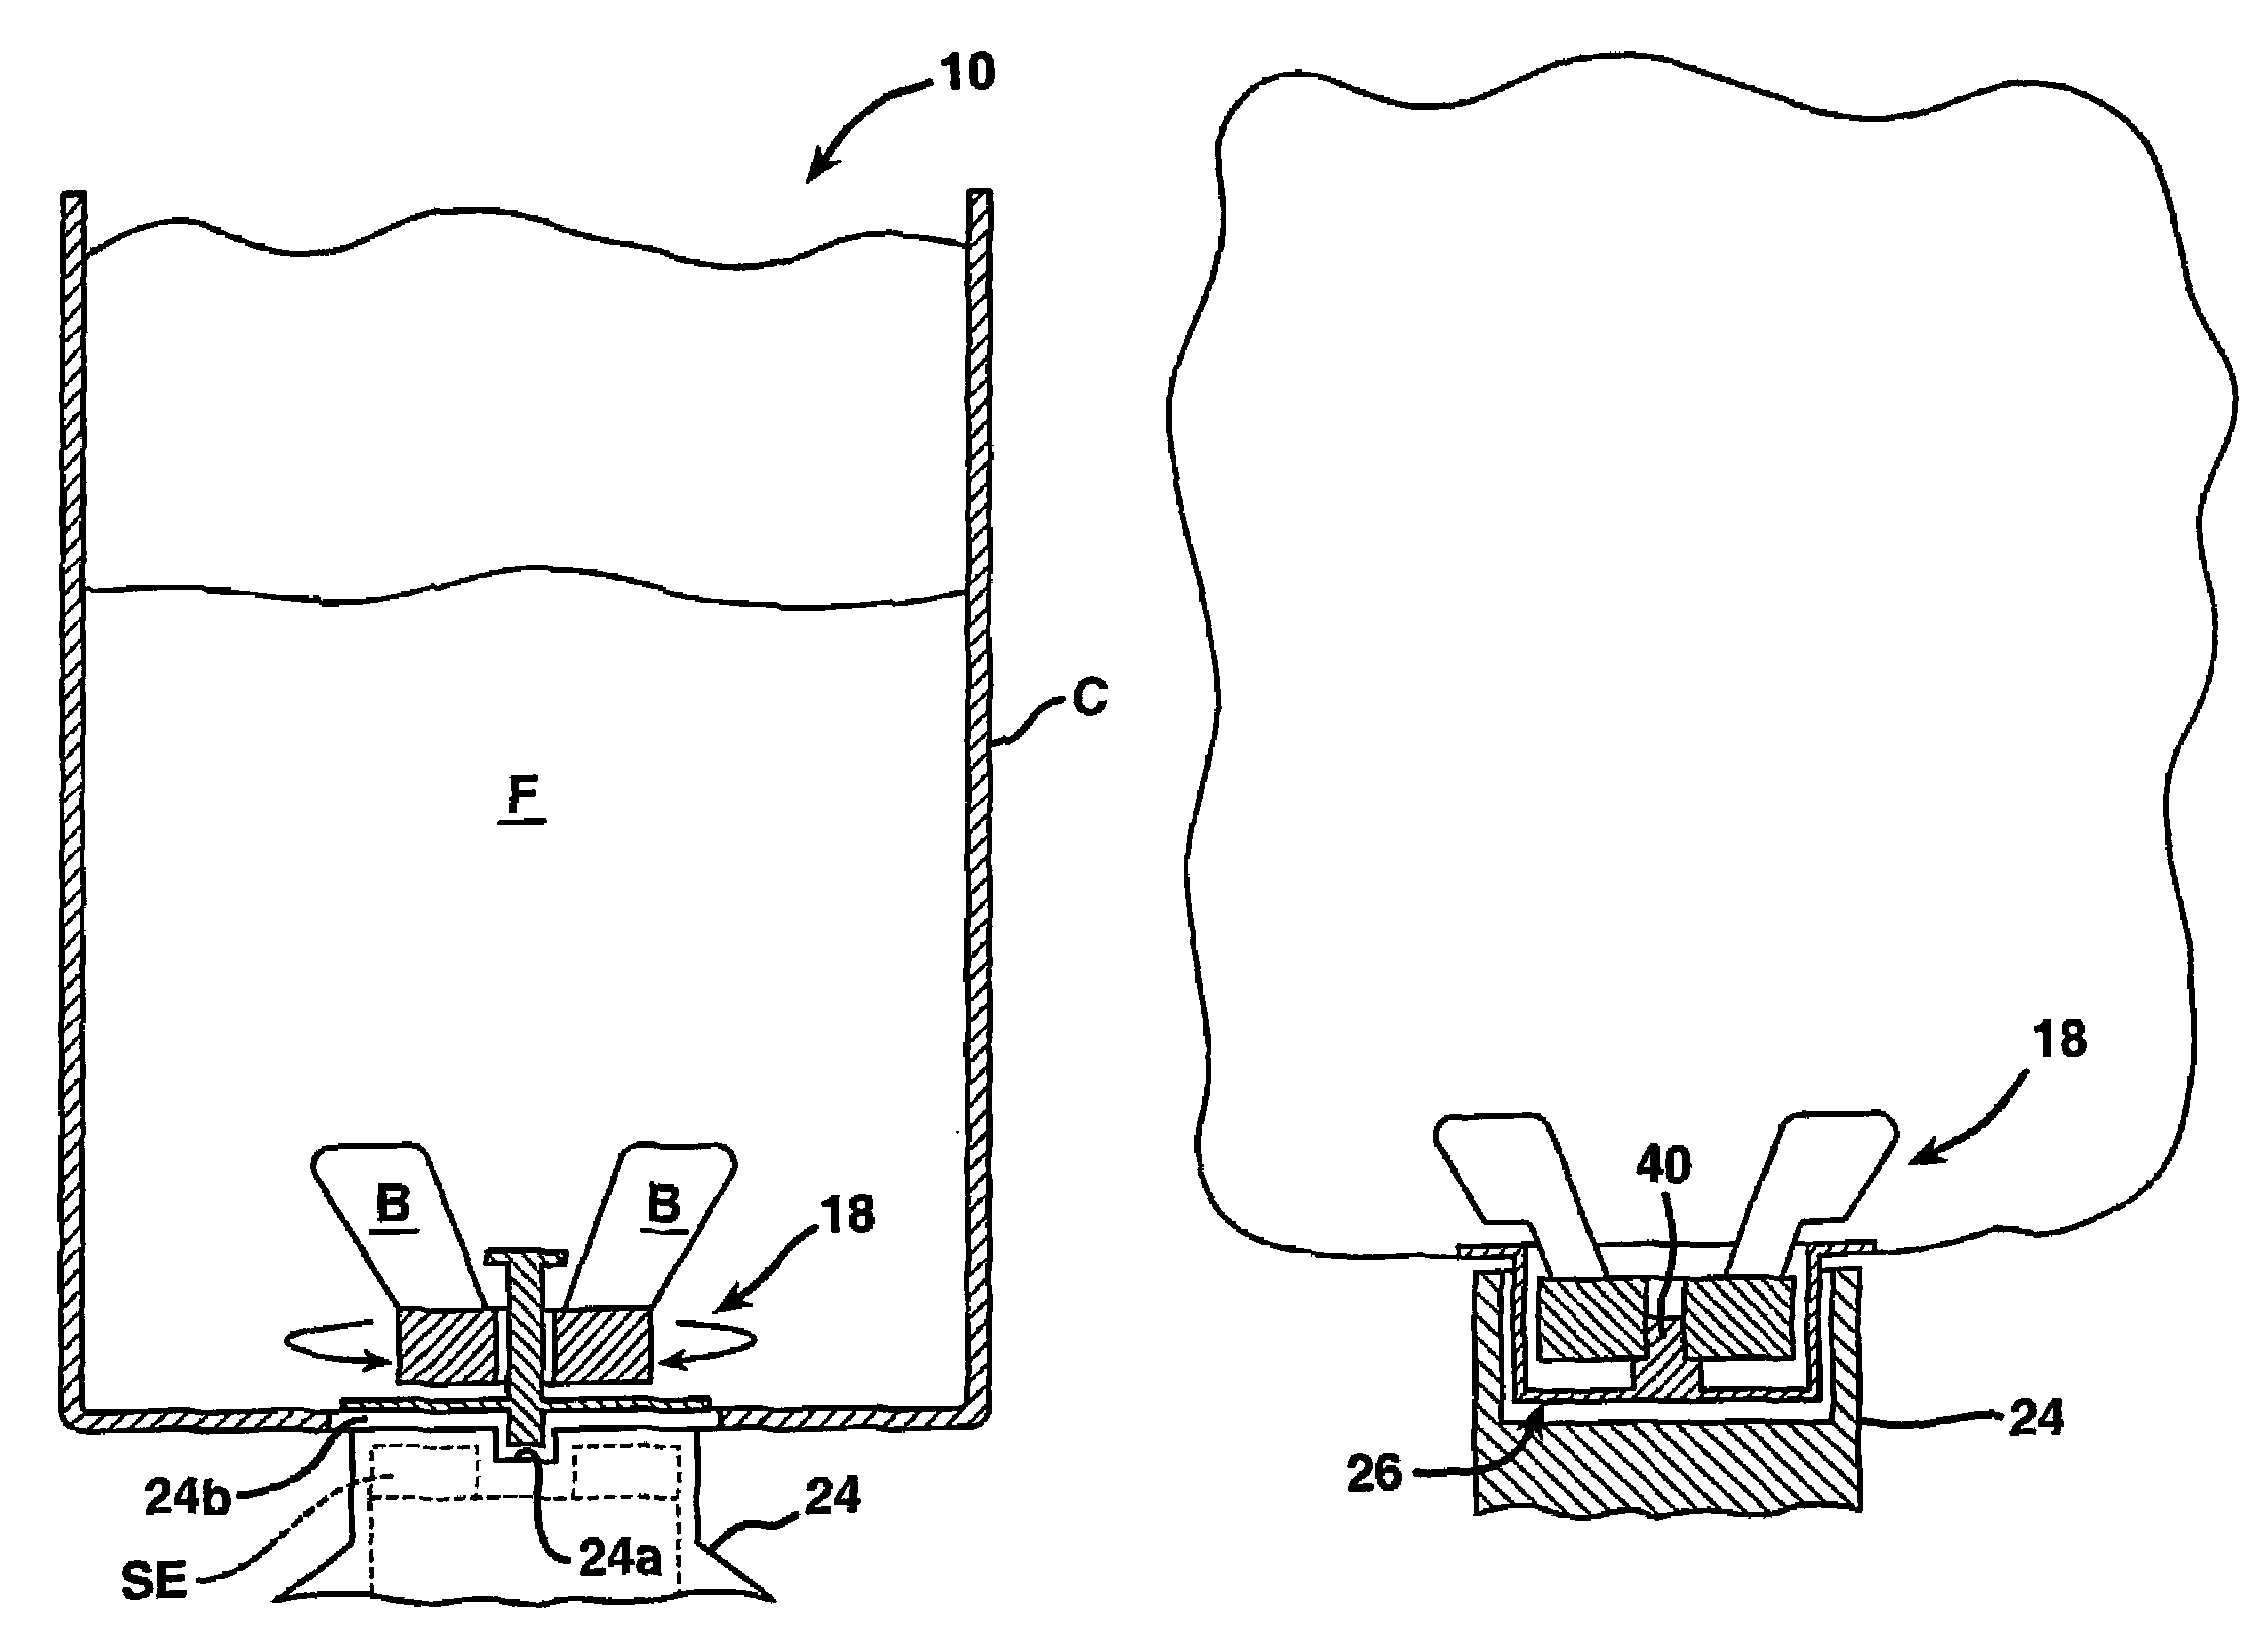 Mixing bag or vessel having a receiver for a fluid-agitating element